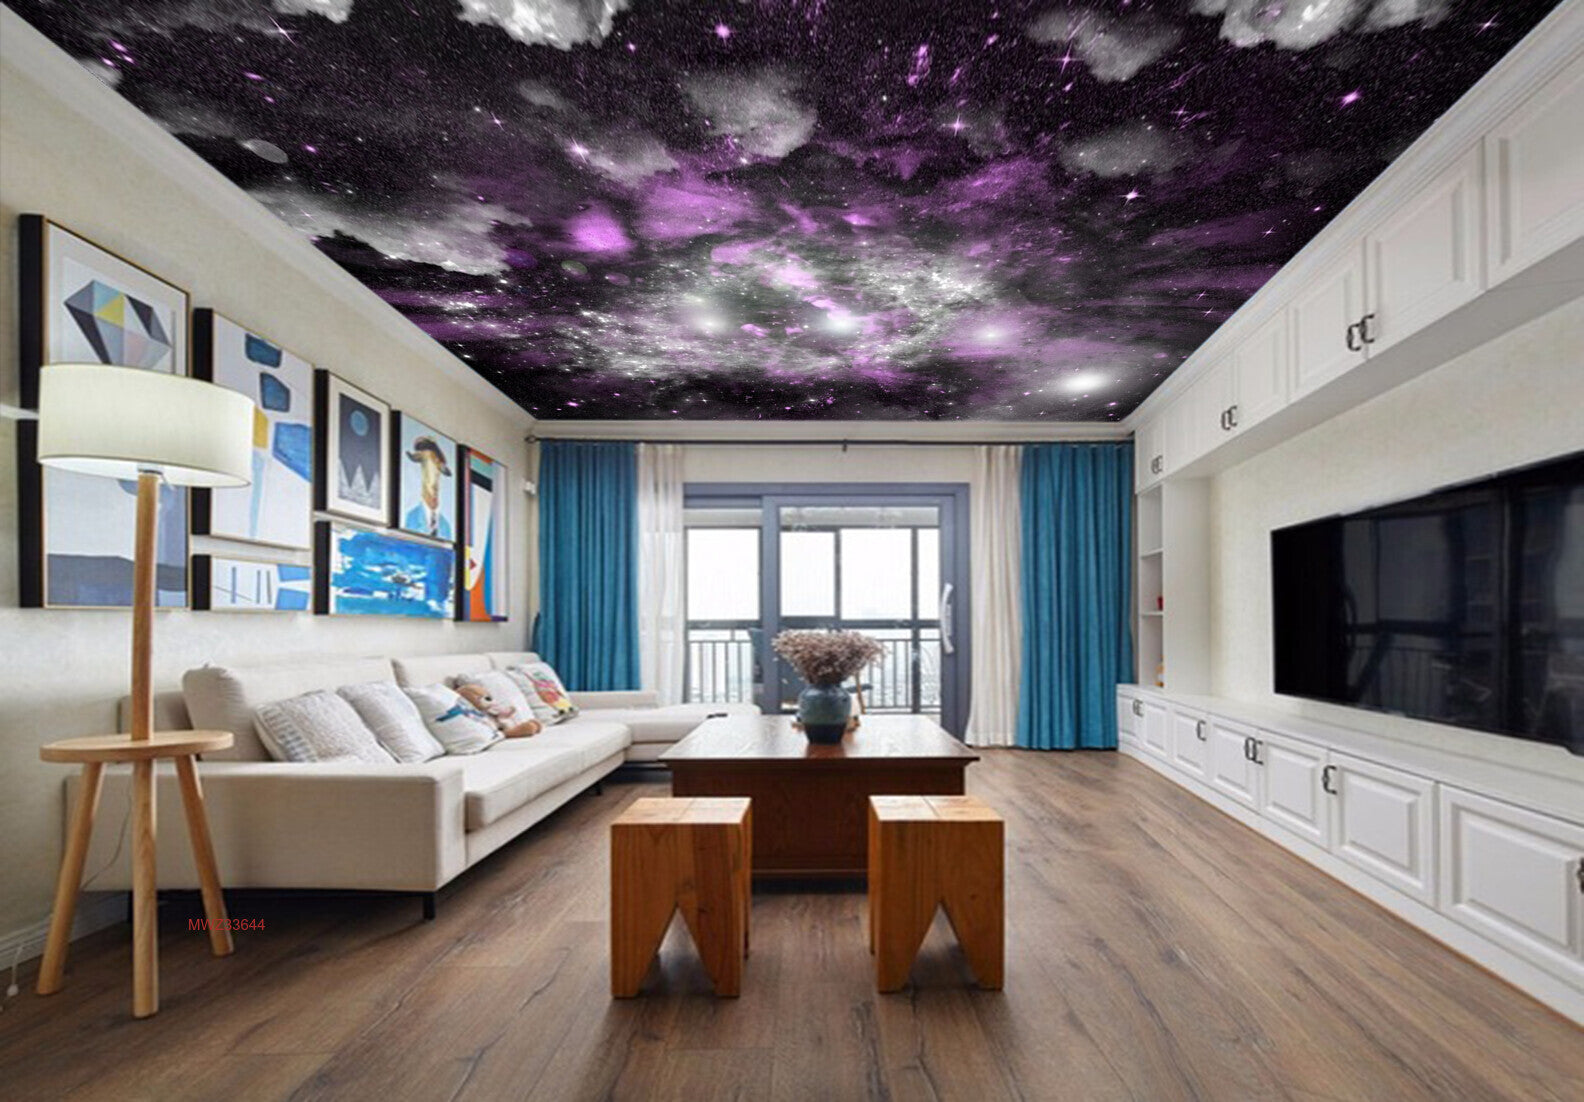 Avikalp MWZ3364 Purple White Space Stara HD Wallpaper for Ceiling